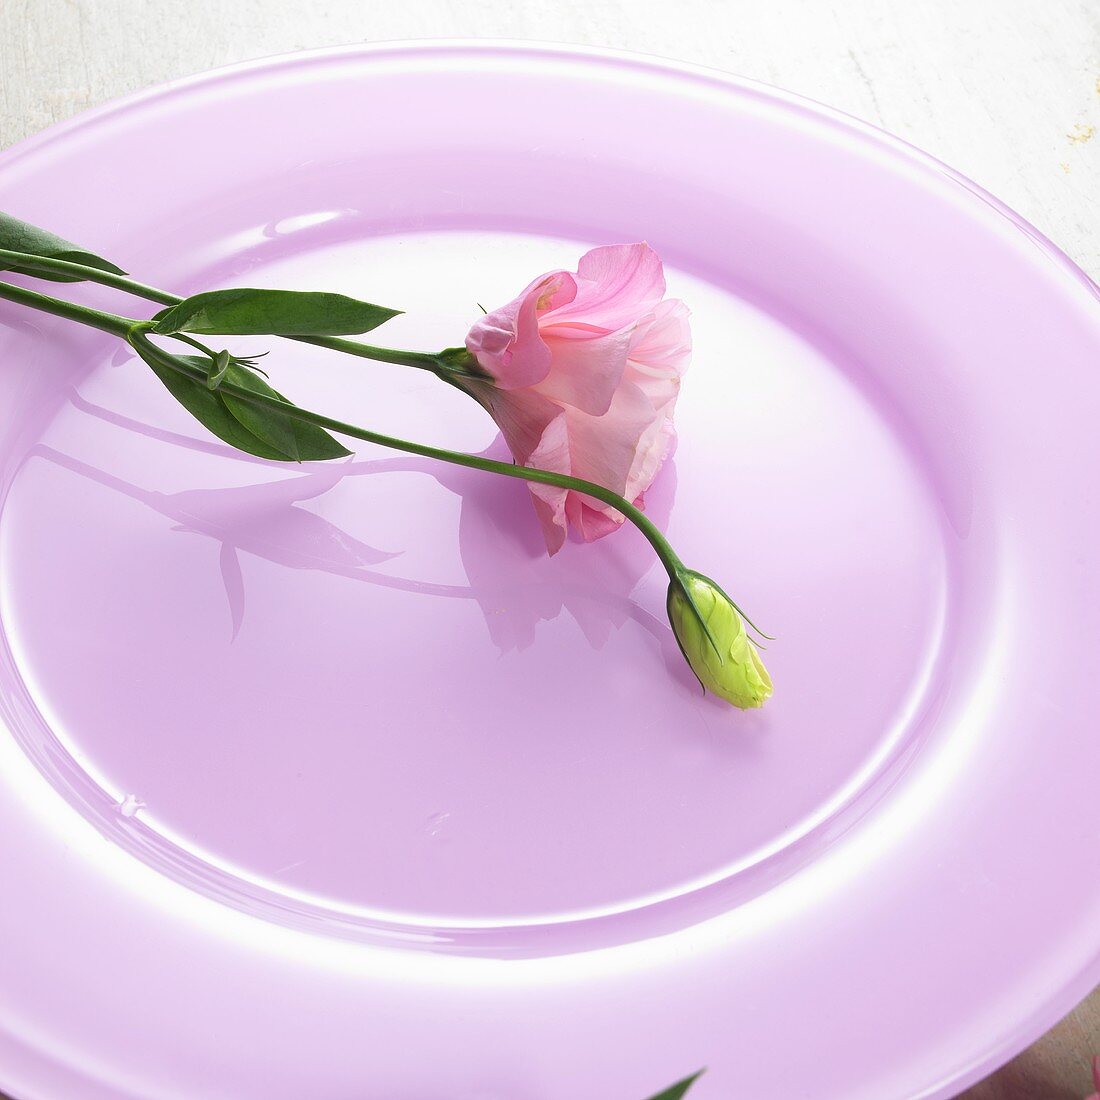 Blume auf pinkfarbenem Teller